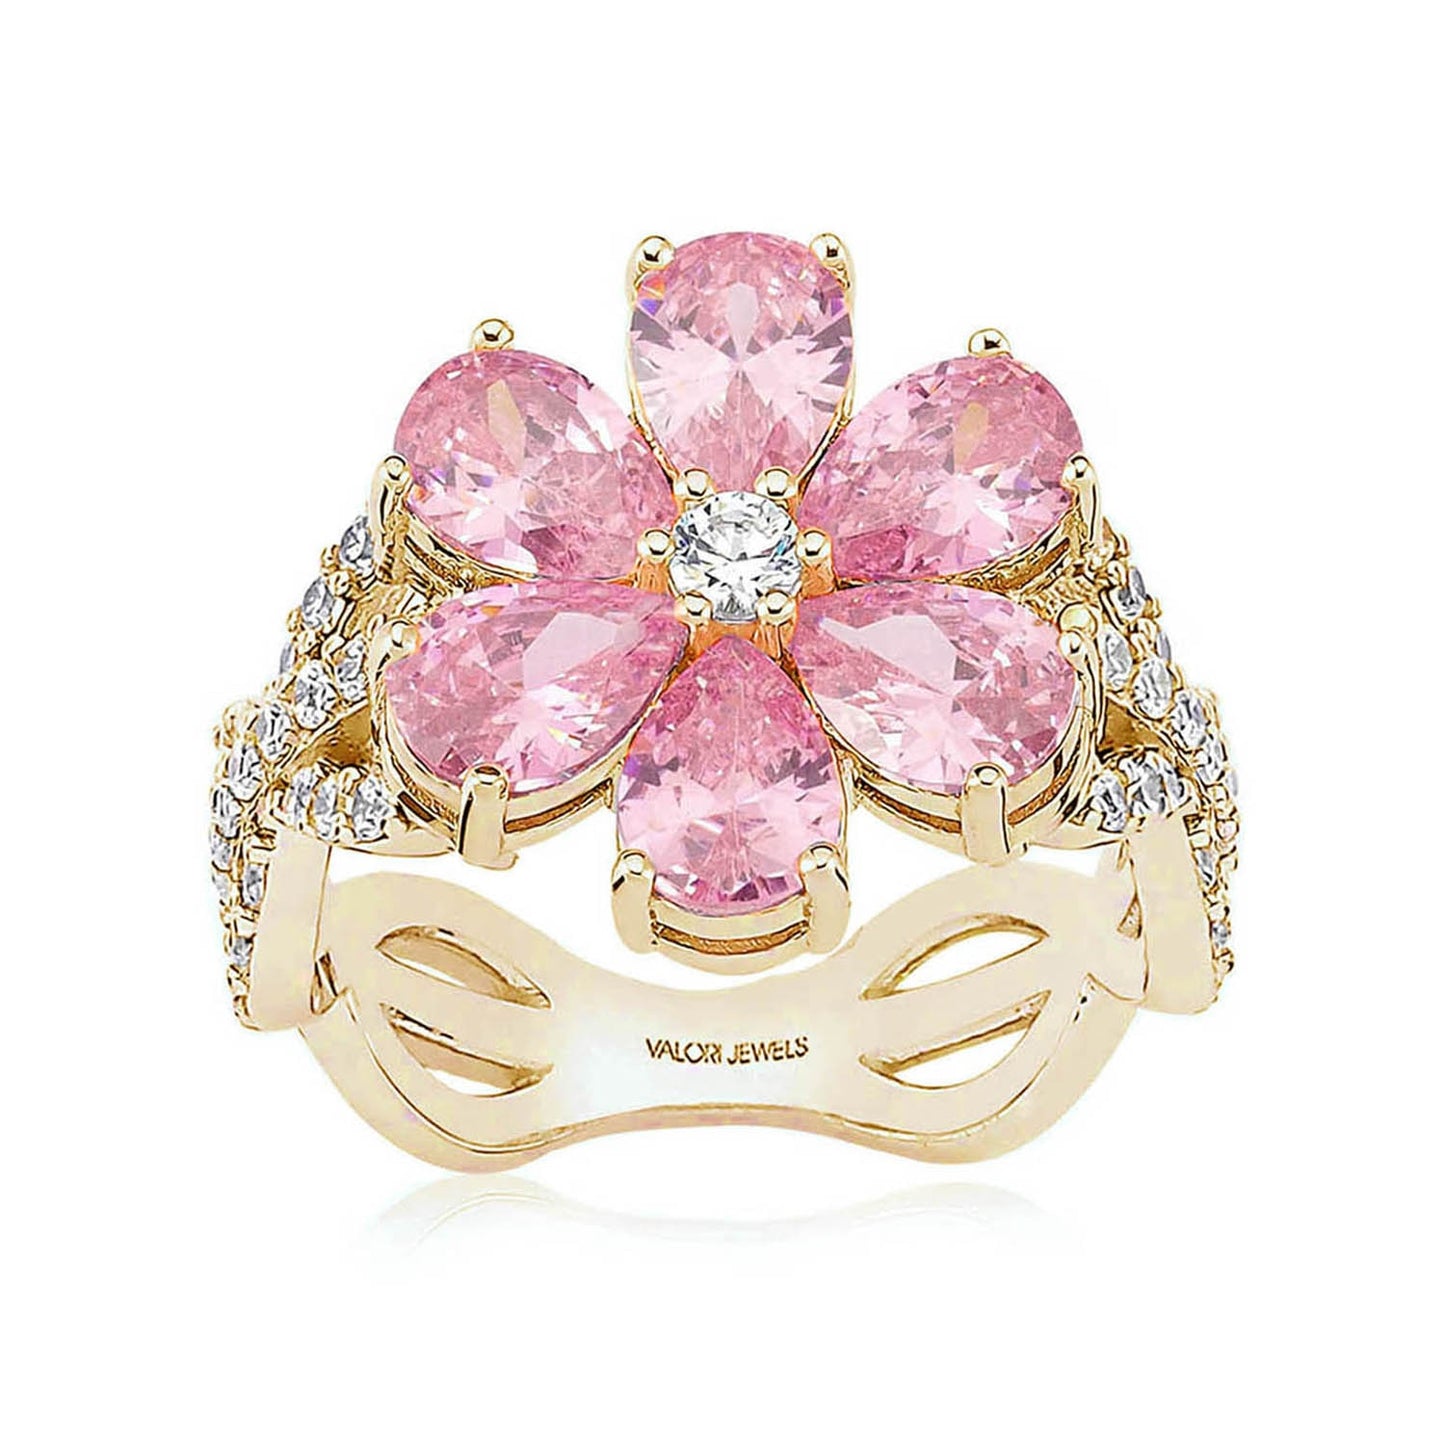 Valori Jewels Magnolia Flower Ring, 2 Ct Zircon Pink Pear Gemstone, Rhodium Plated, 925 Silver, Fine Jewelry - Niki Ice Jewelry 